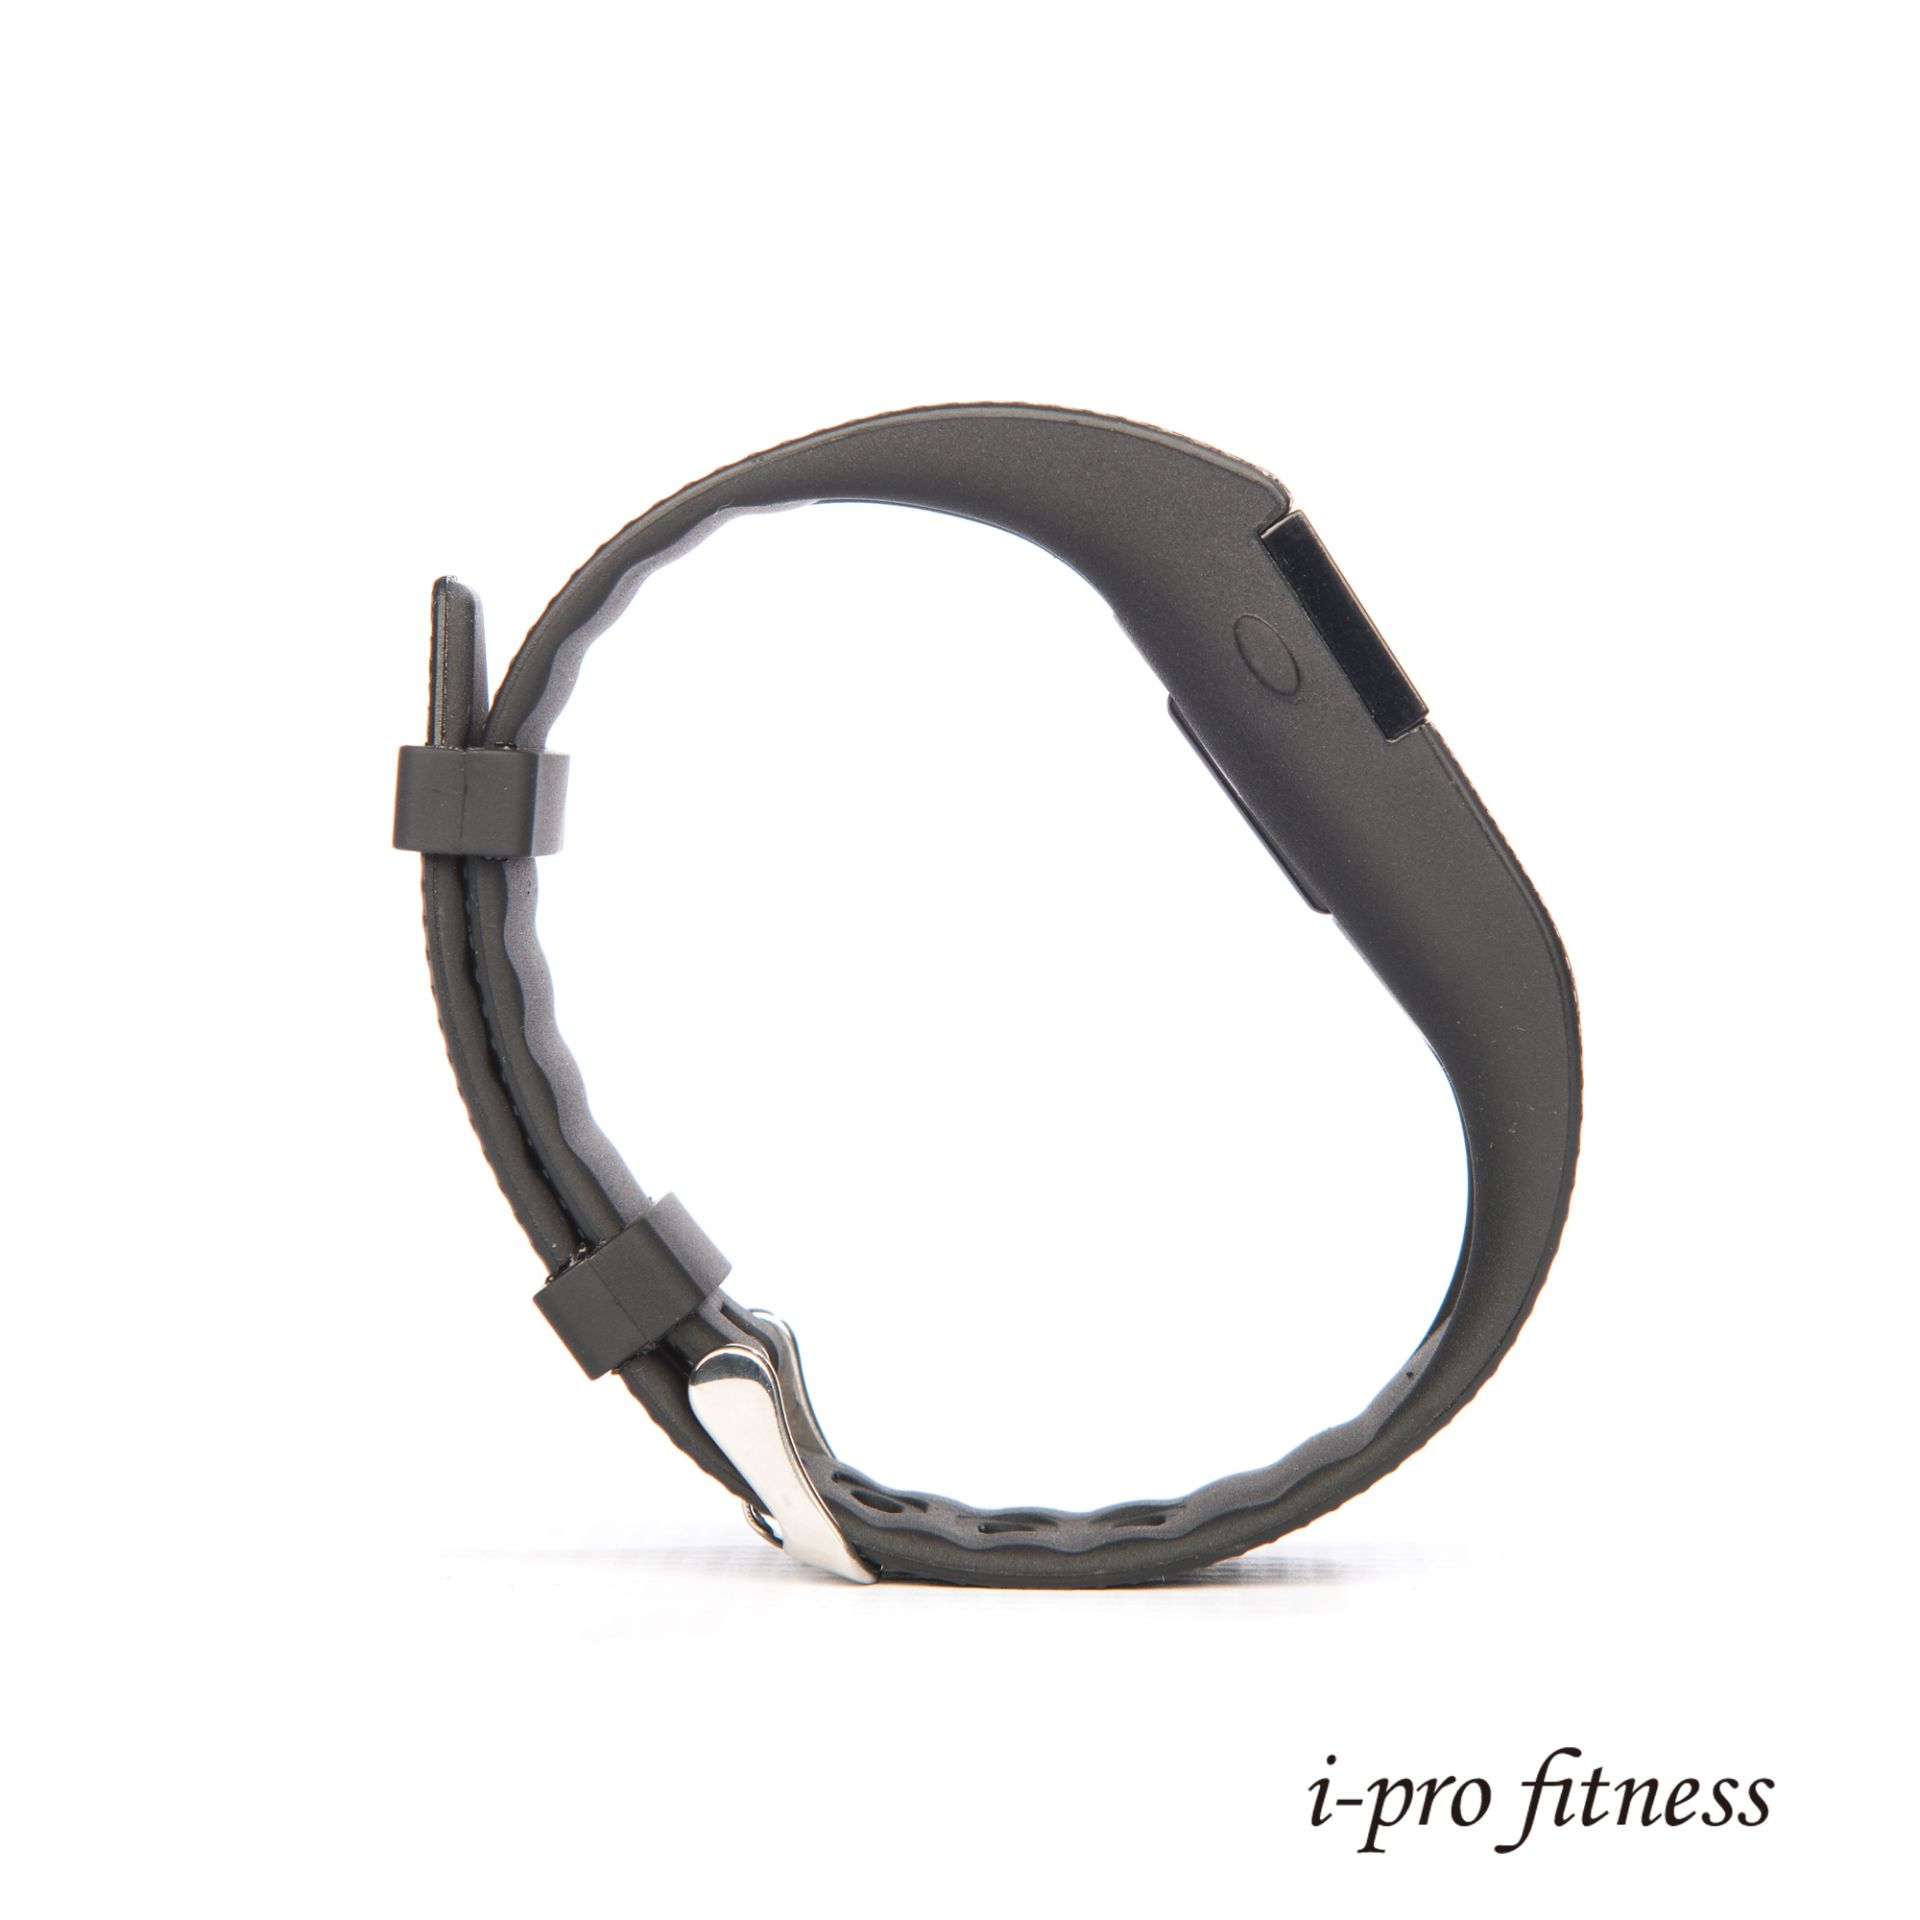 Fitness Tracker i-pro fitness, Bluetooth 4.0 Sports Smart Bracelet, Heart Rate Monitor, Pedometer. - Image 5 of 8